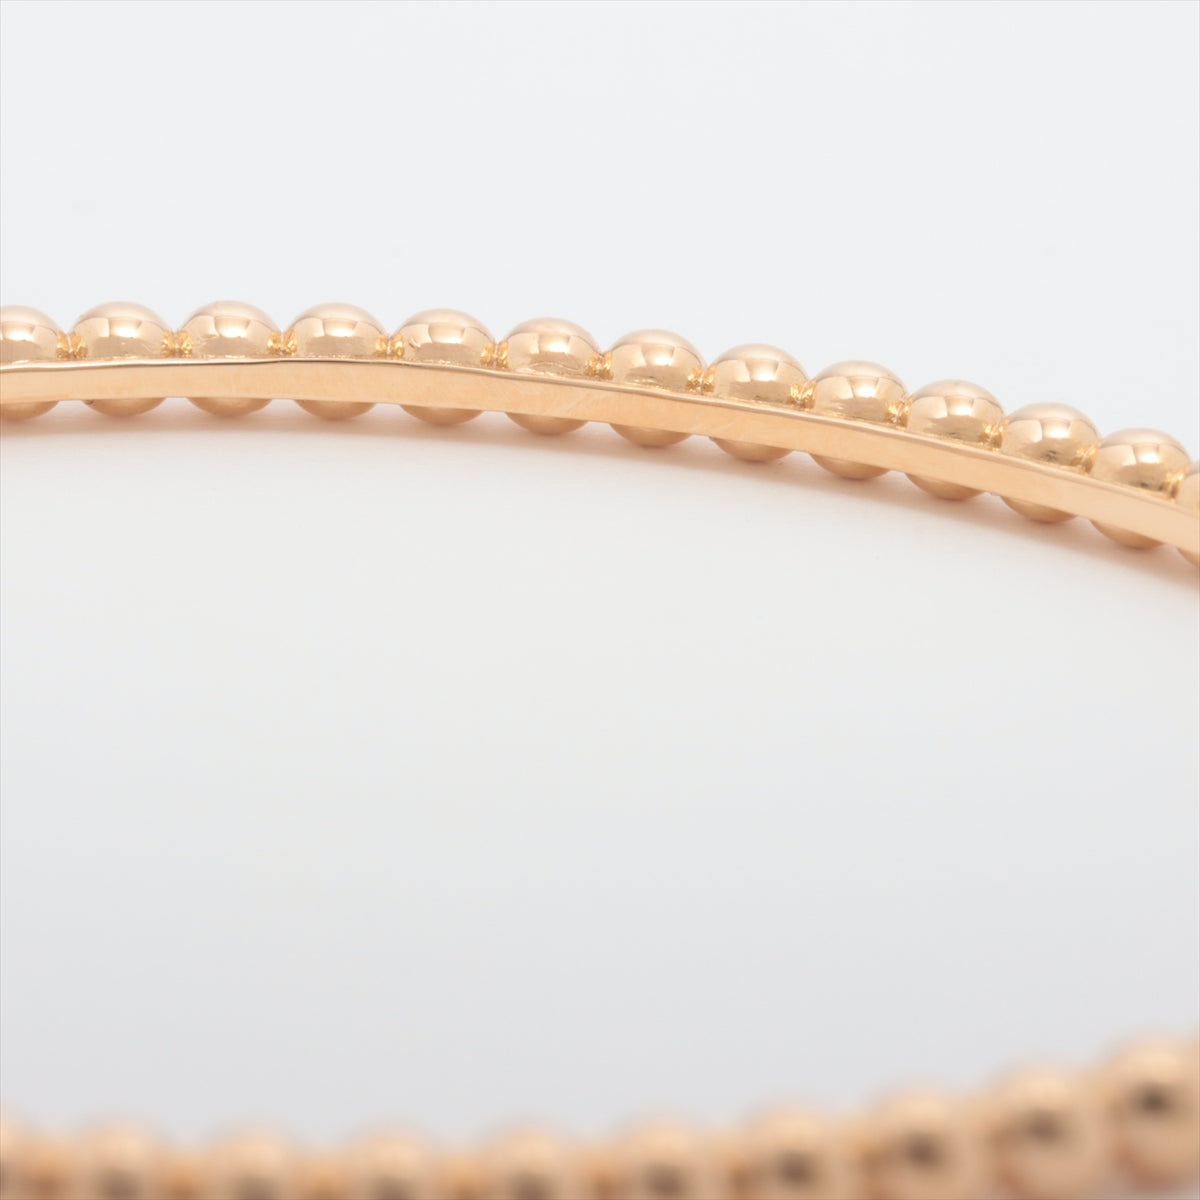 Van Cleef & Arpels Golden Pearl Bracelet 750 (PG) 21.6g L VCARO95800